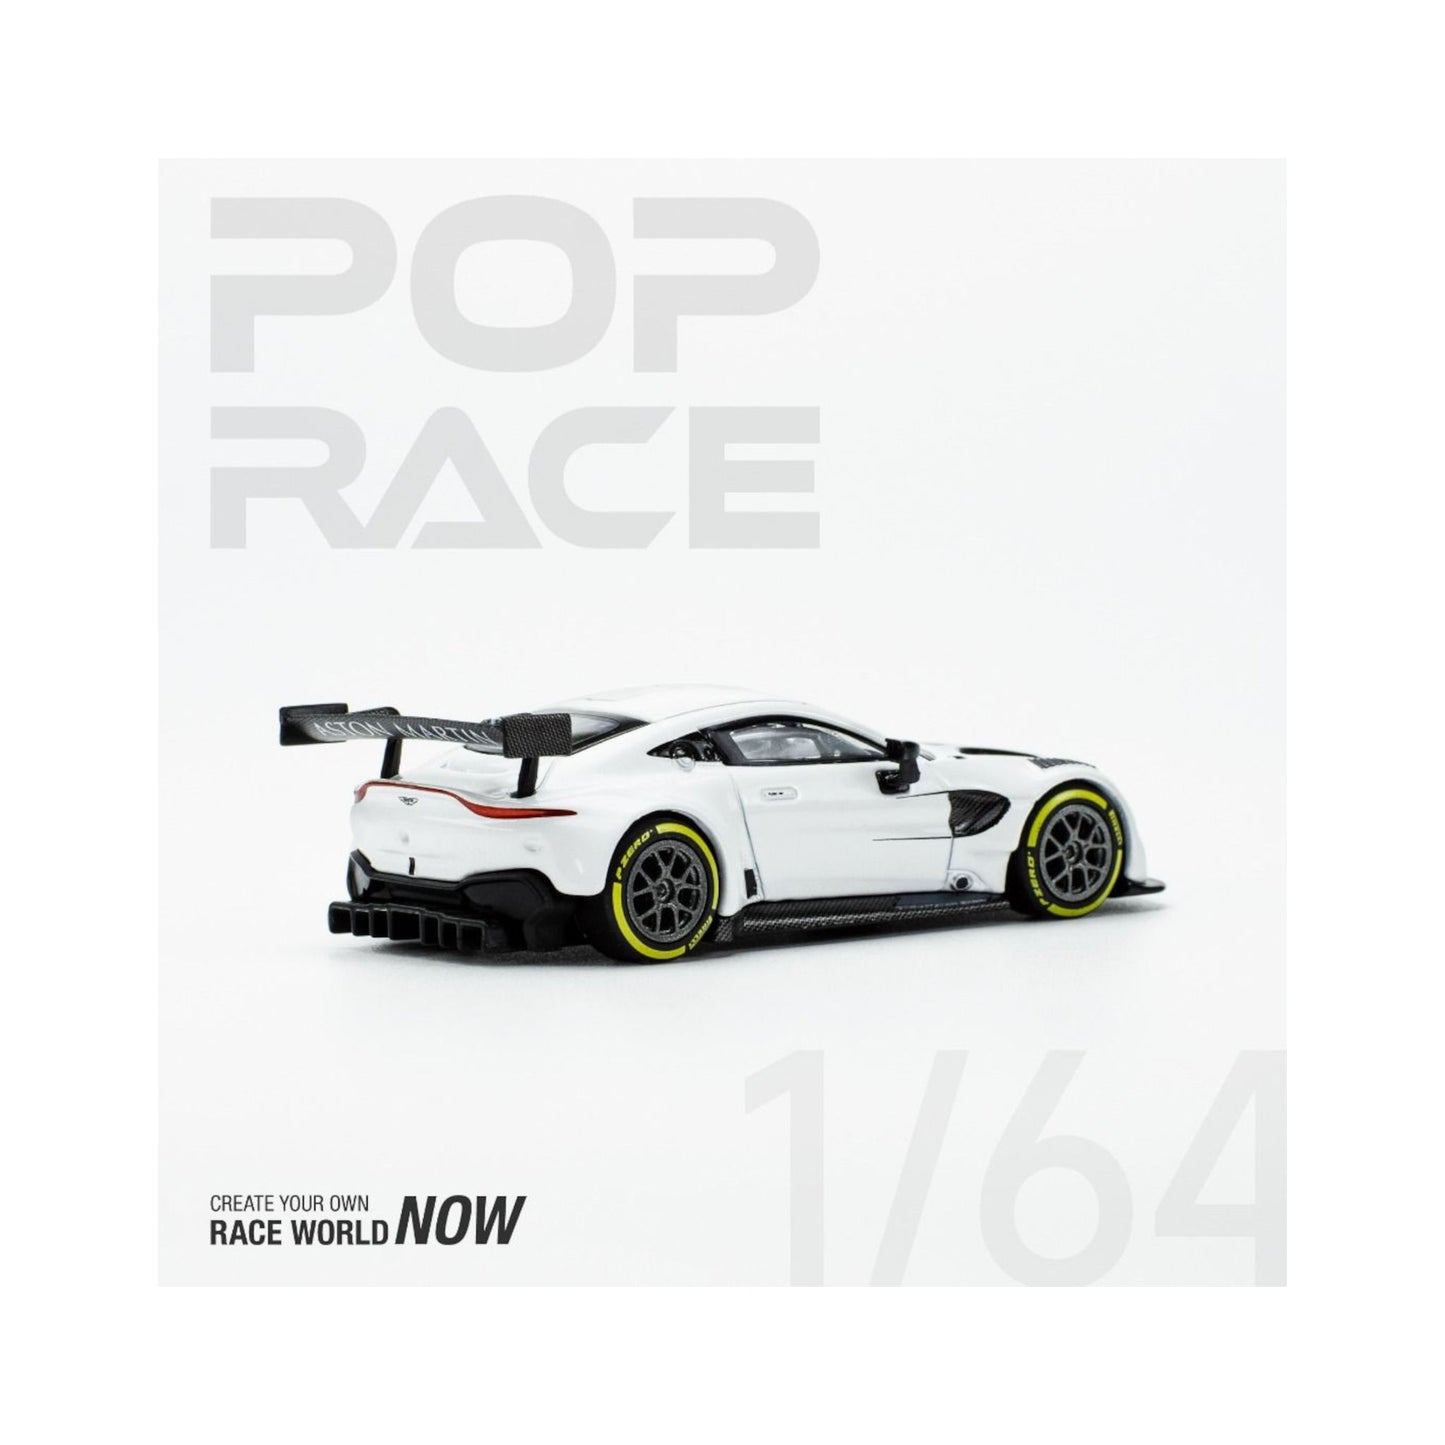 Aston Martin GT3 Blanc Pop Race 1/64 - PR640045